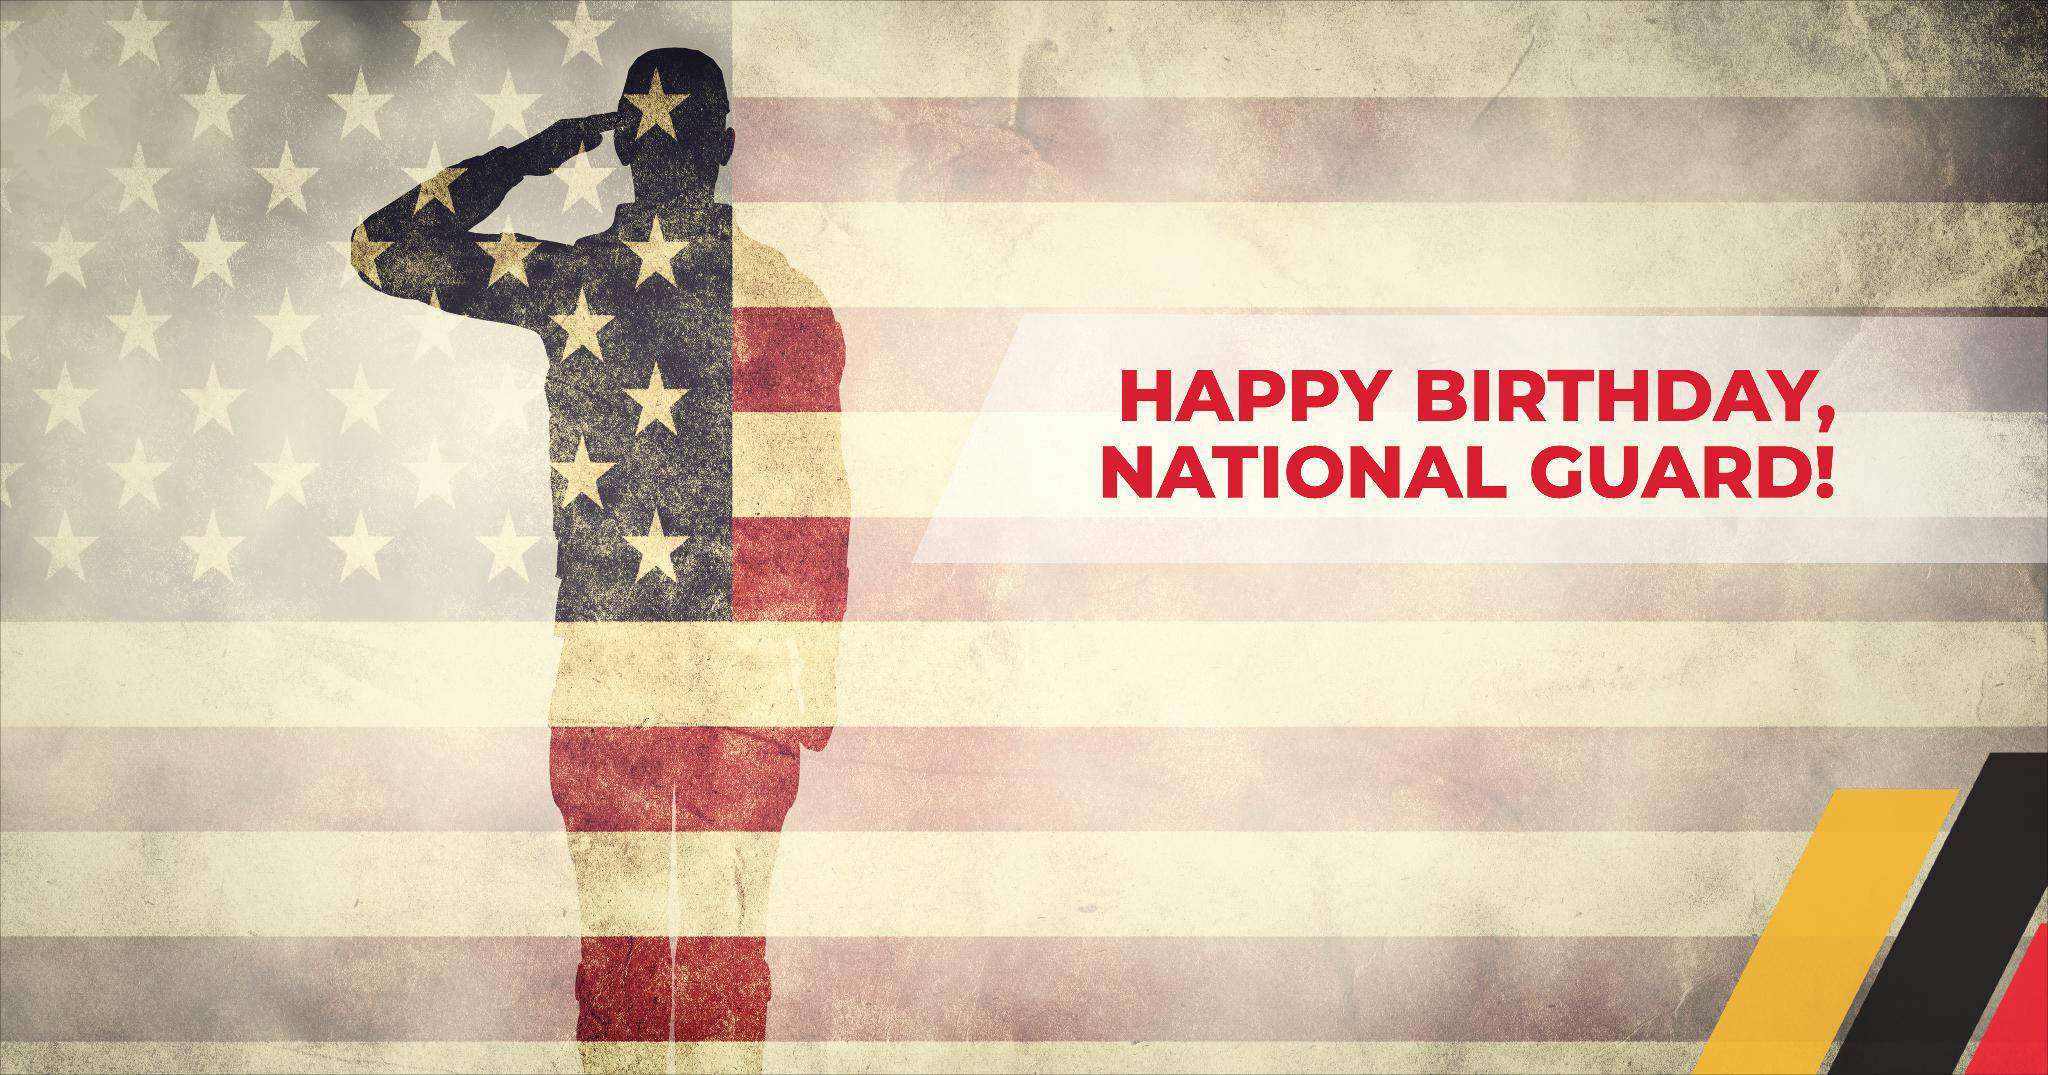 U.S. National Guard Birthday Wishes pics free download